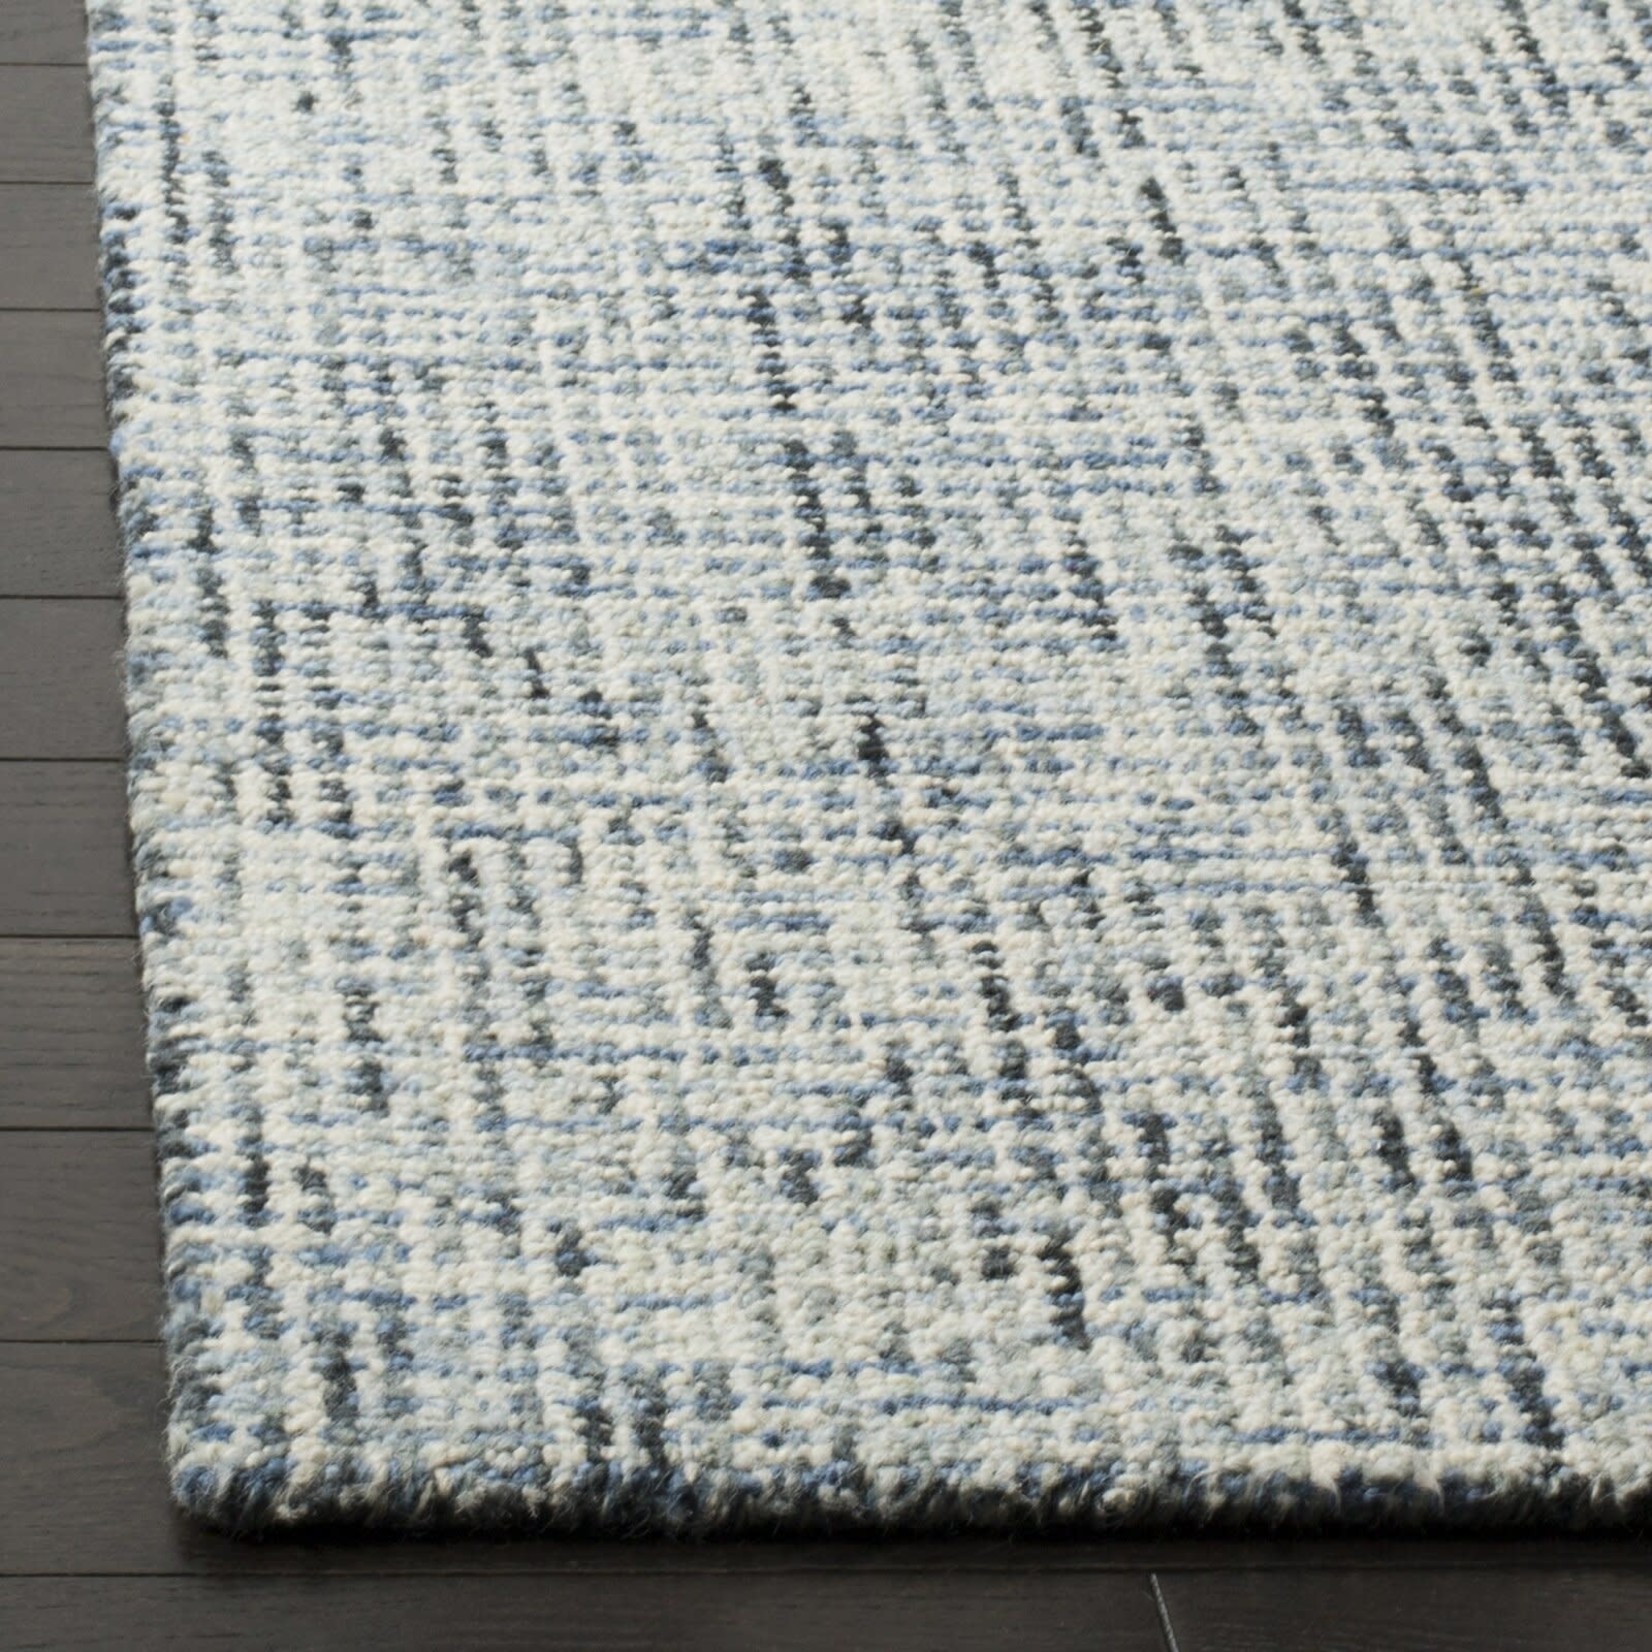 *2' x 3' Handmade Tufted Wool Blue/Charcoal Area Rug